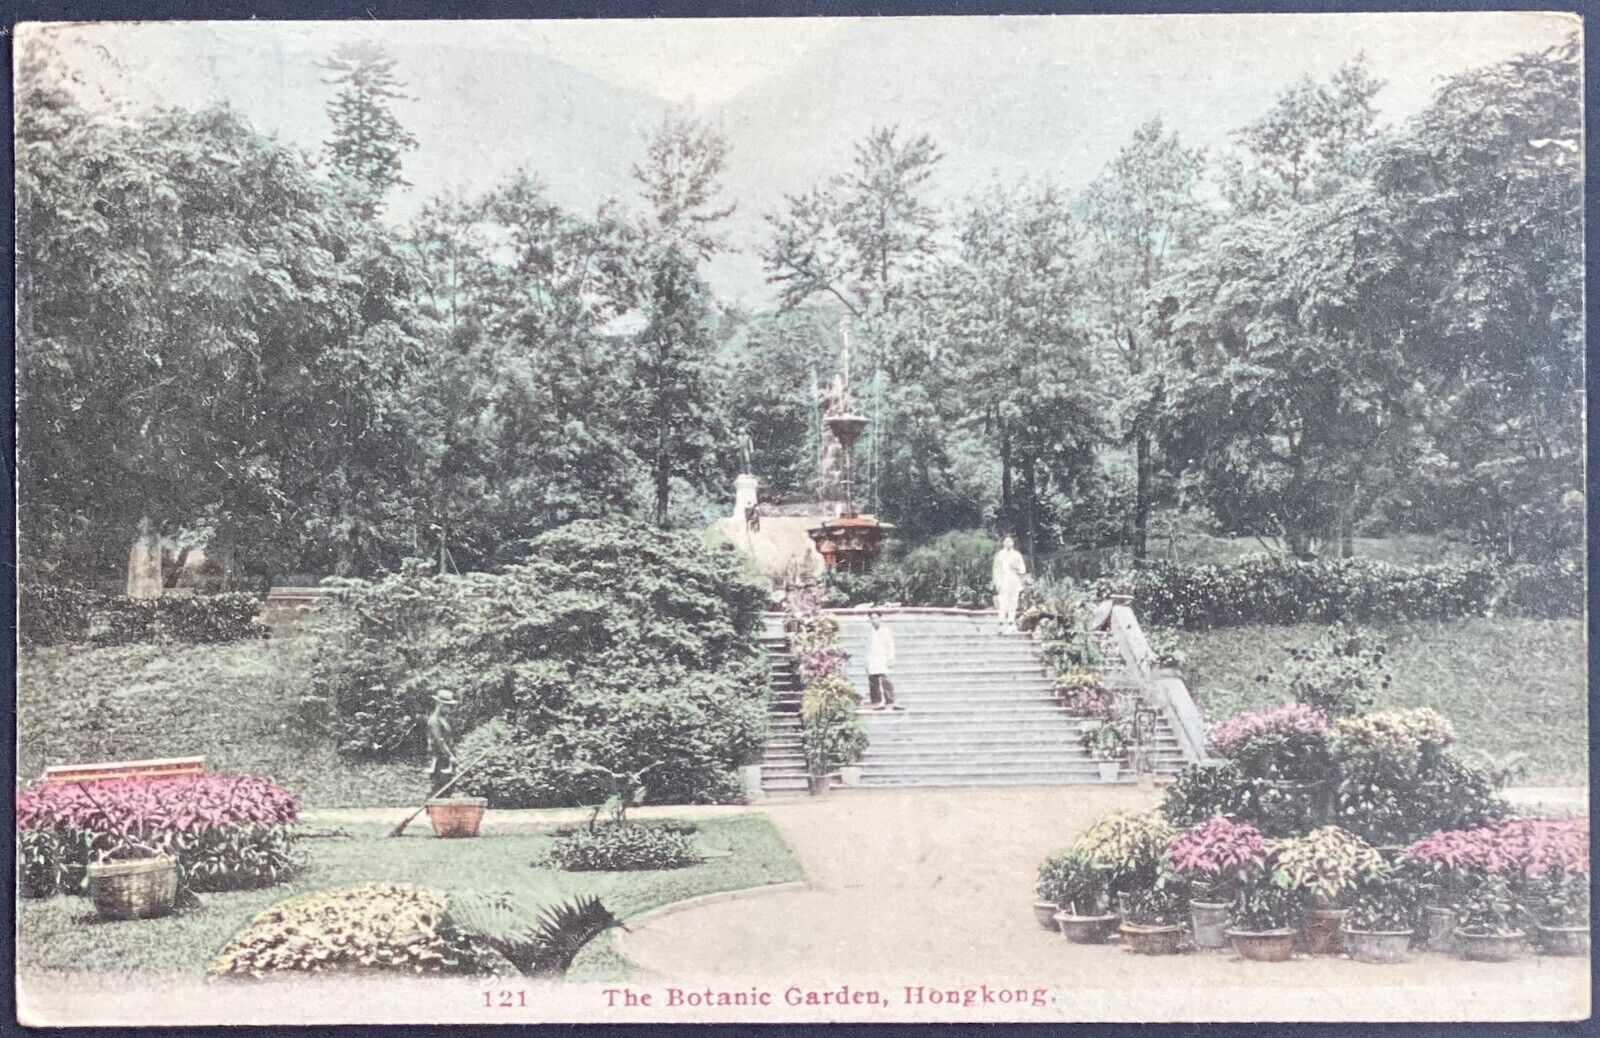  The Botanic Garden, Hong Kong (Hongkong) RPPC Colored Postcard Dated 1922